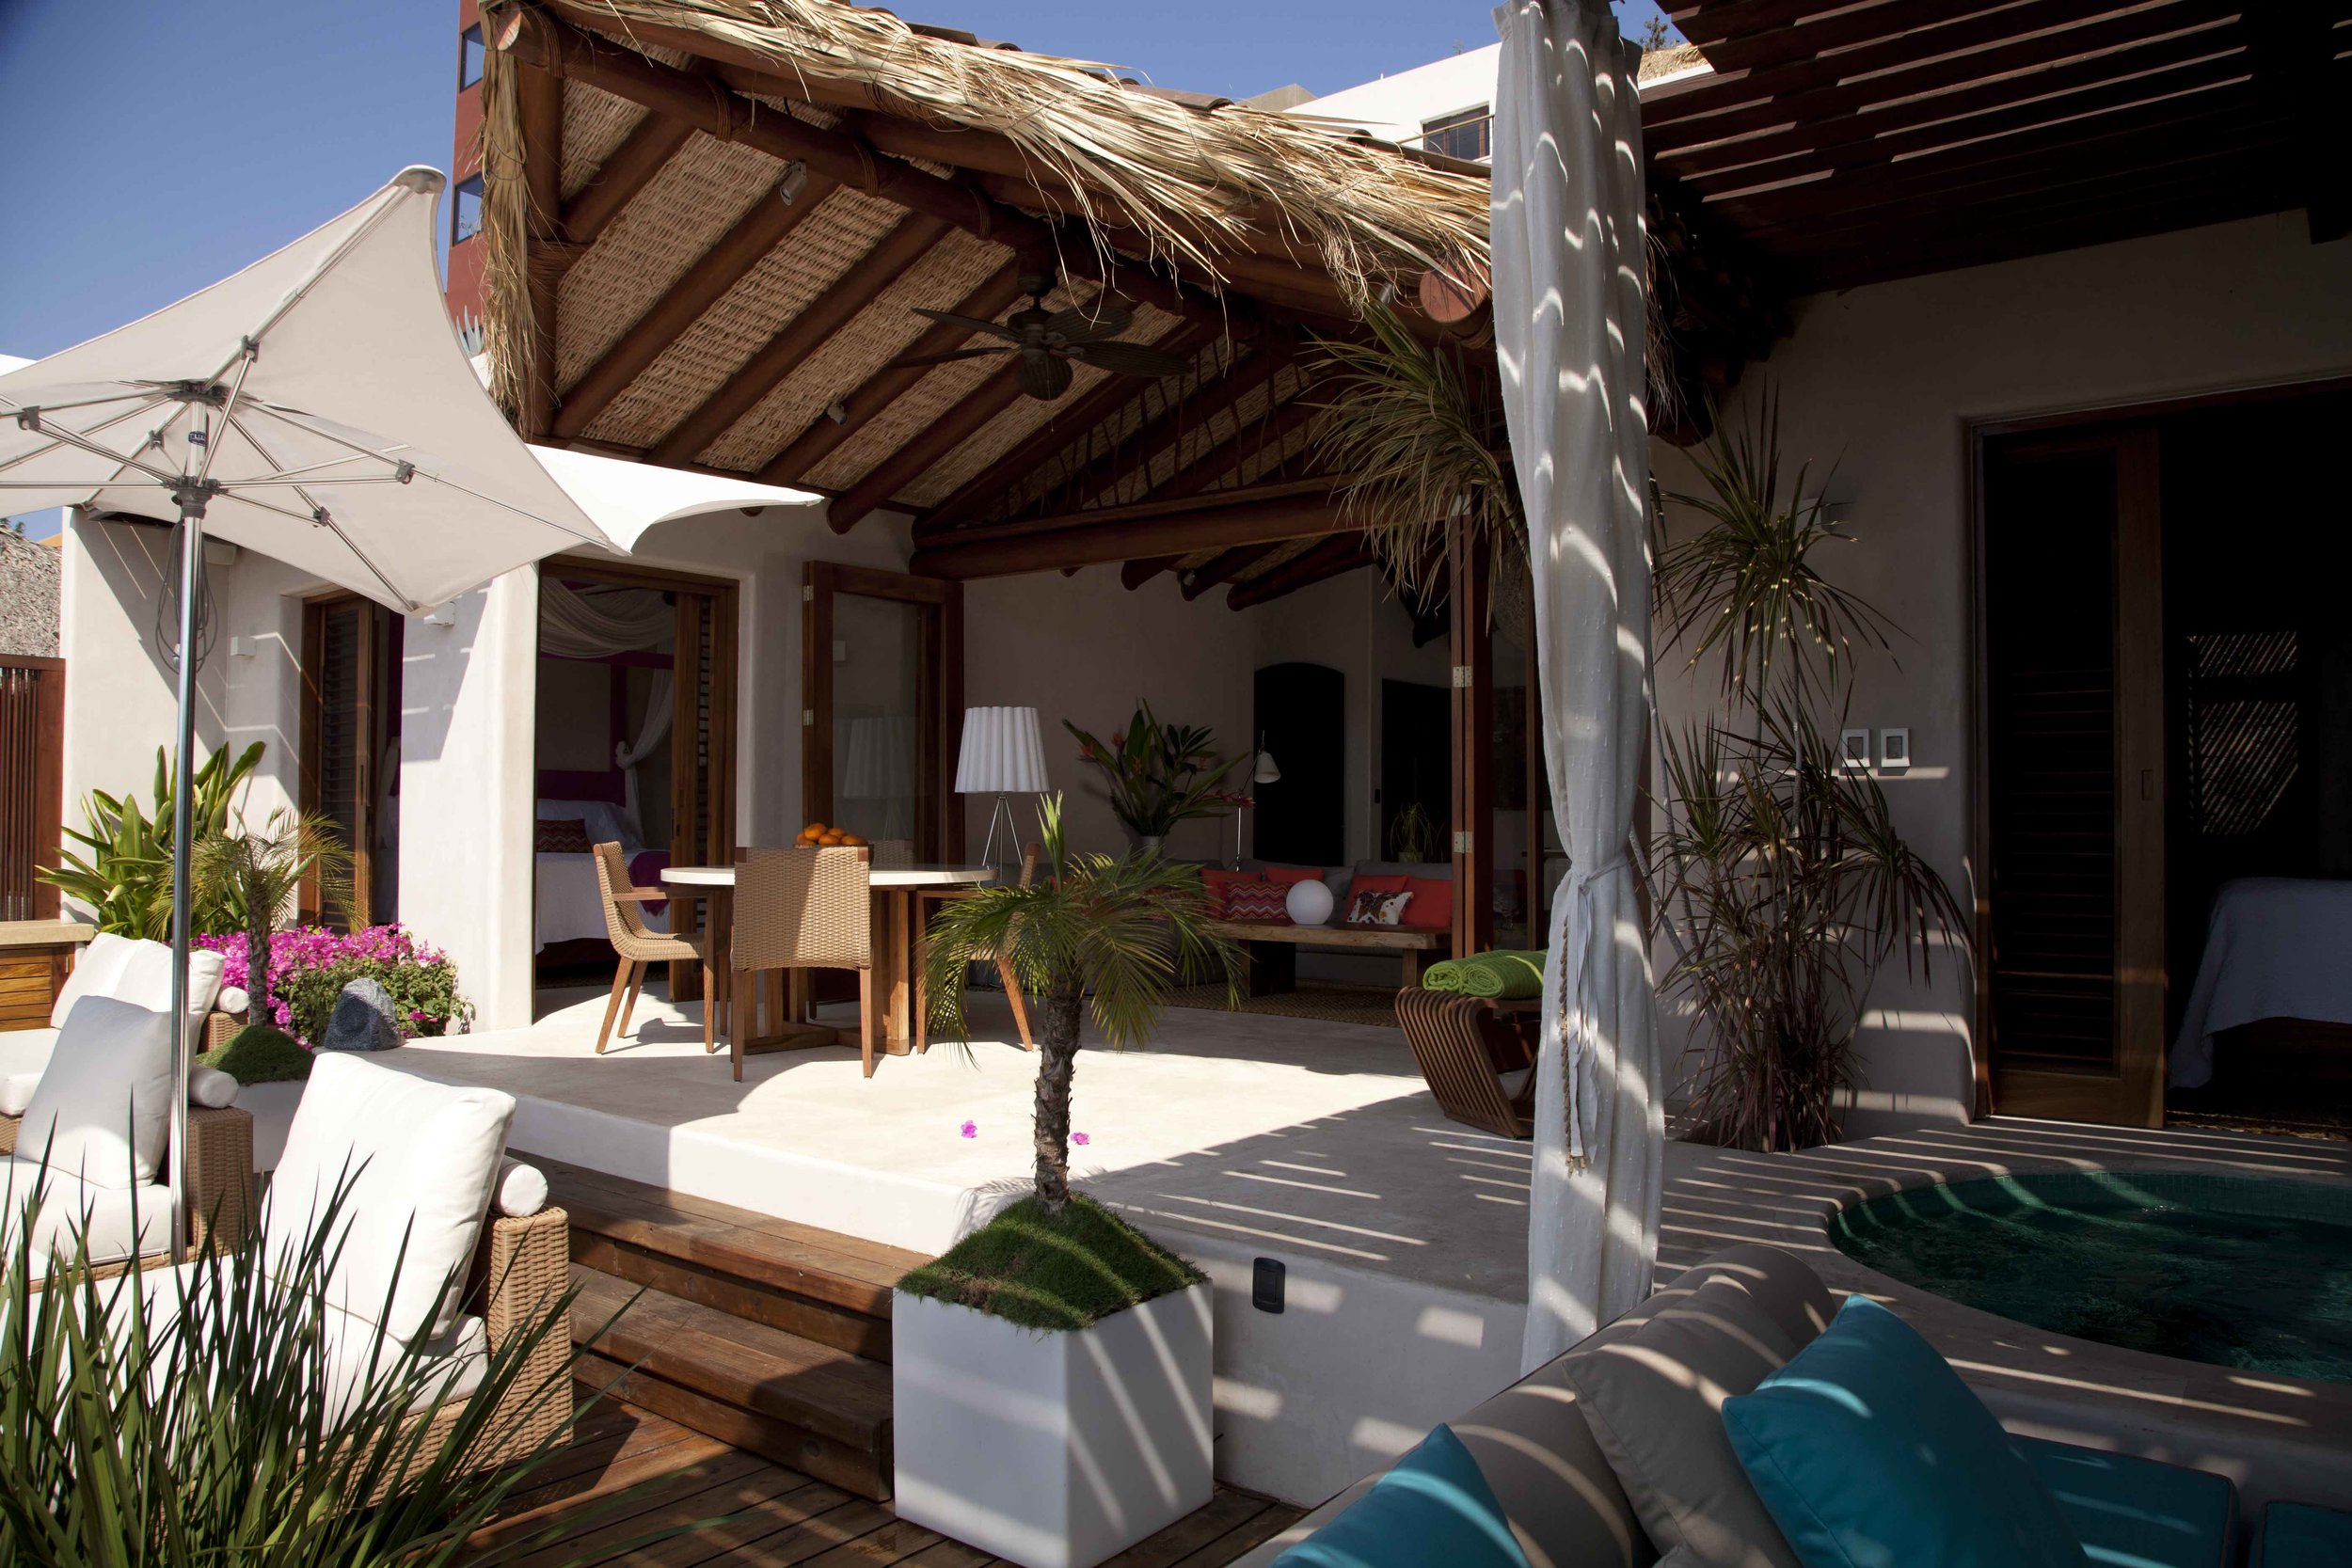 ensueno-casa-1-properties-condos-for-rent-sale-tara-medina-real-estate-zihuatanejo-mexico-ixtapa-full-ocean-view-deck.jpg-deck-view-3.JPG